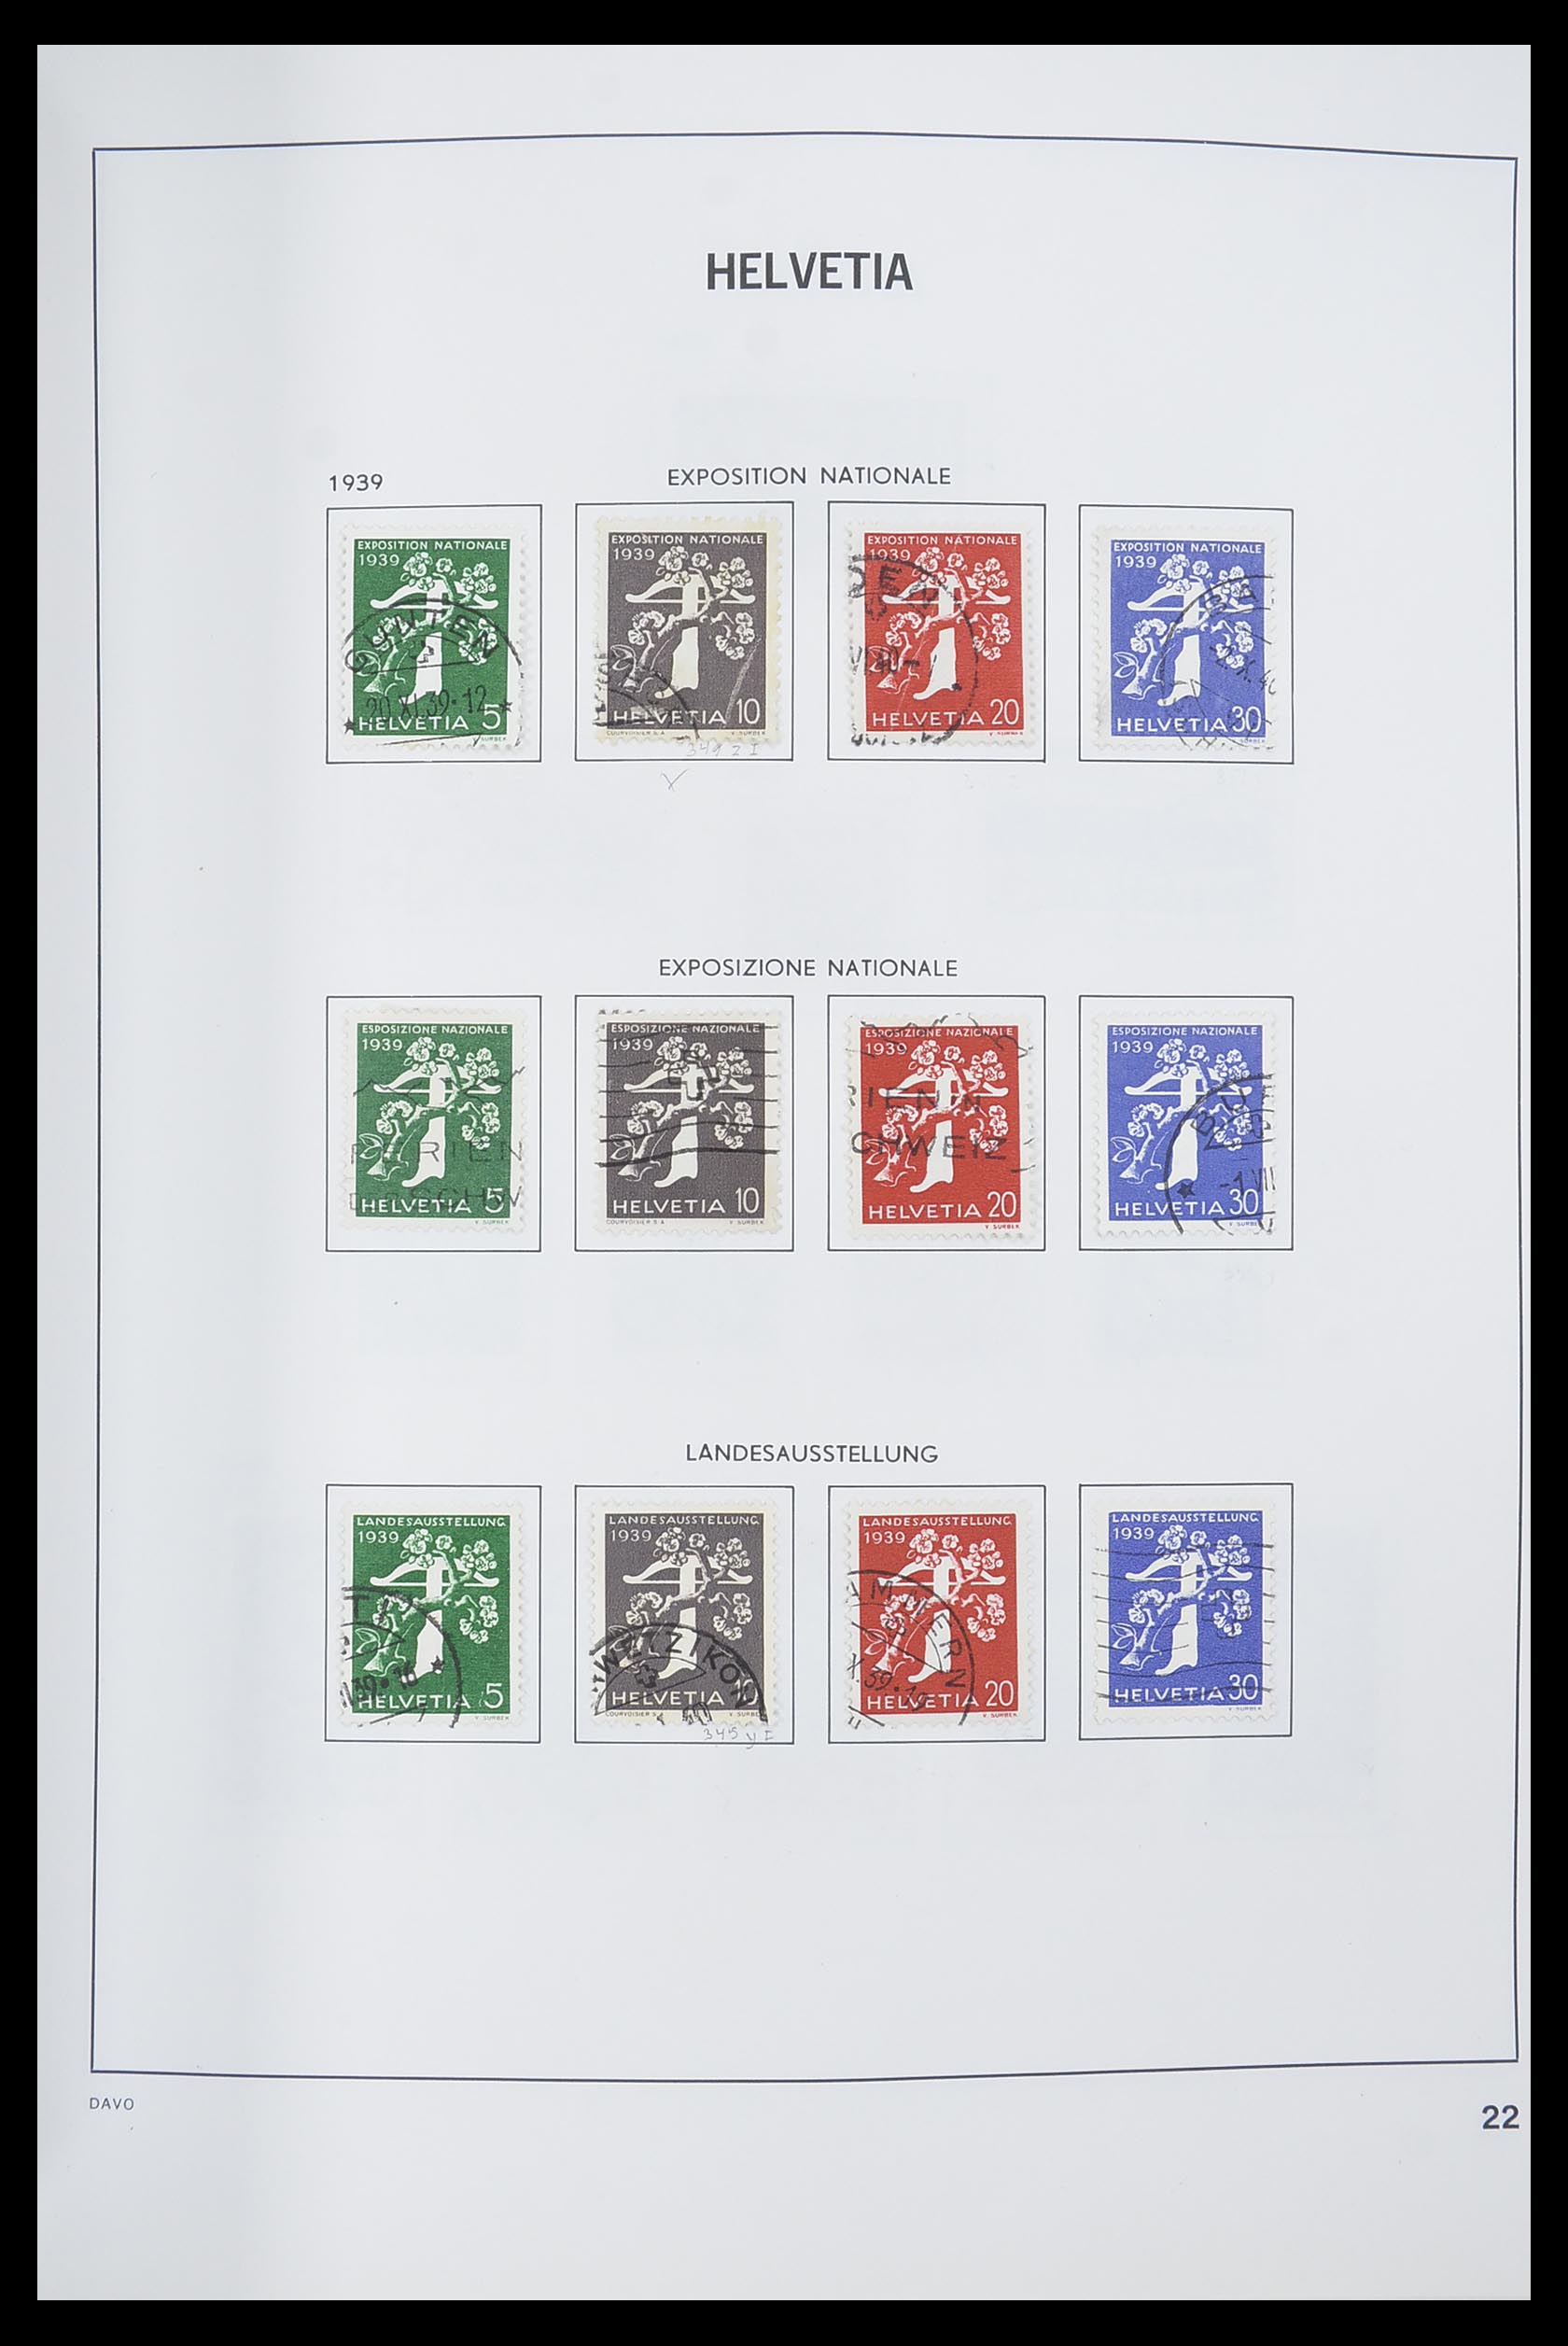 33559 023 - Stamp collection 33559 Switzerland 1850-2000.